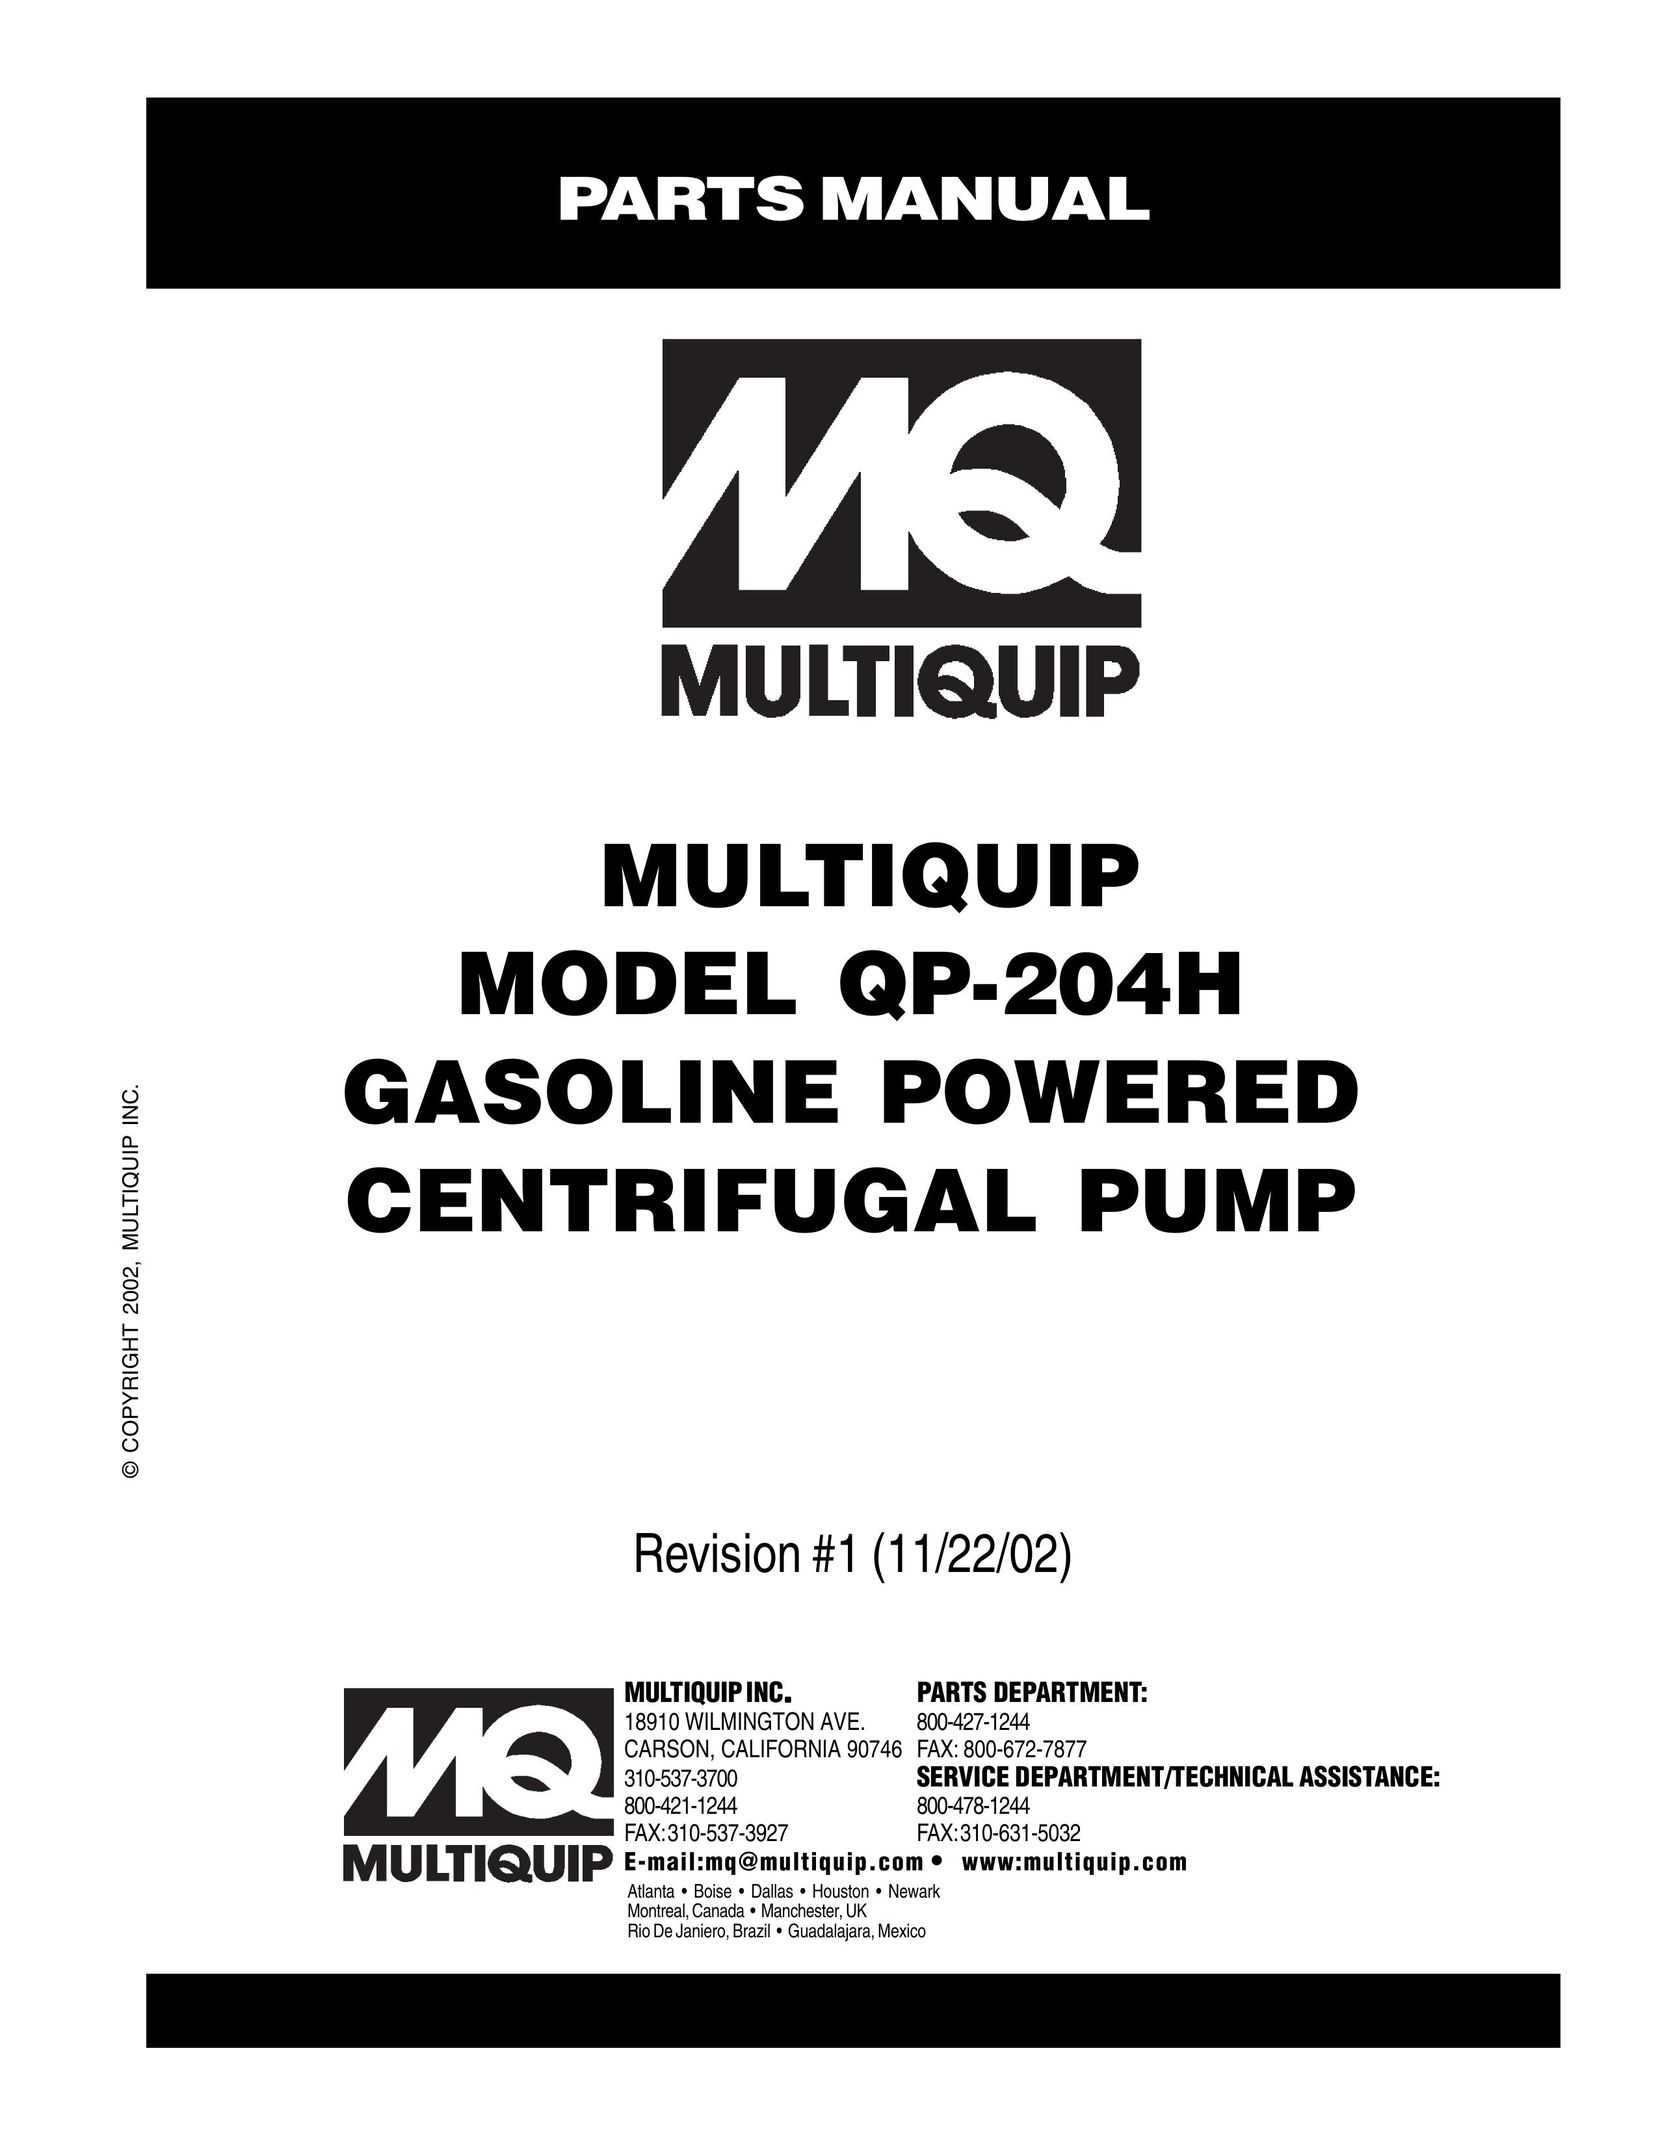 Bushnell QP-204H Water Pump User Manual